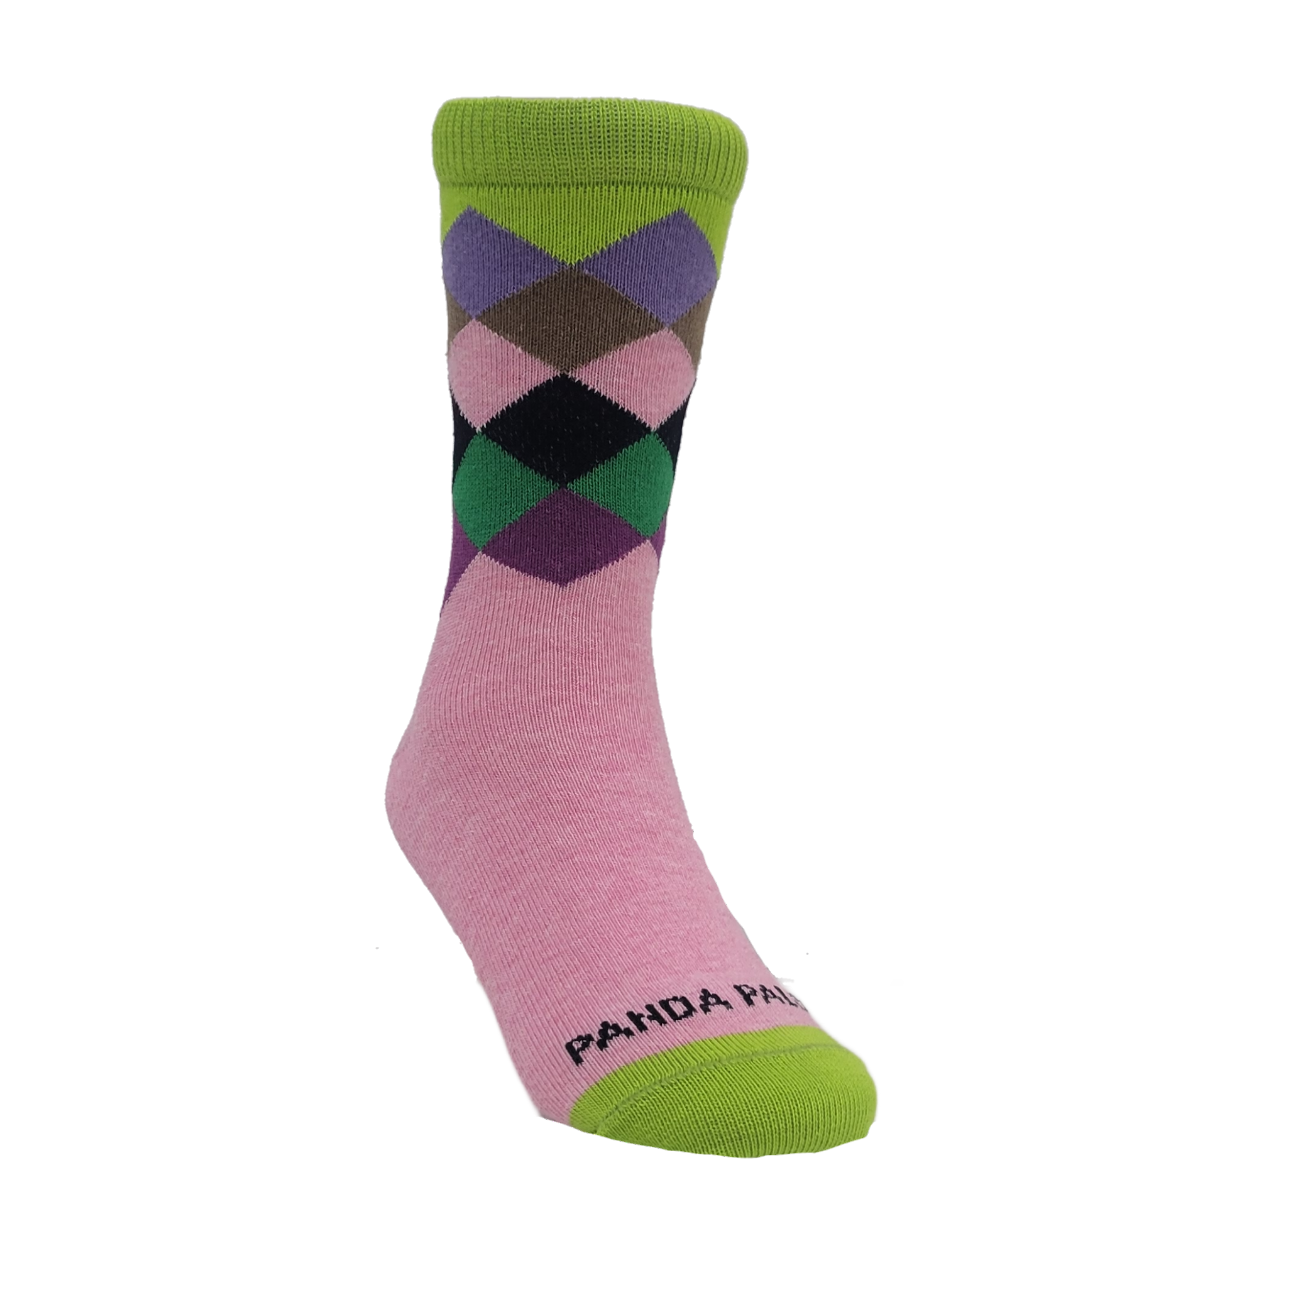 Argyle Socks for Kids from the Sock Panda (Ages 6-8)